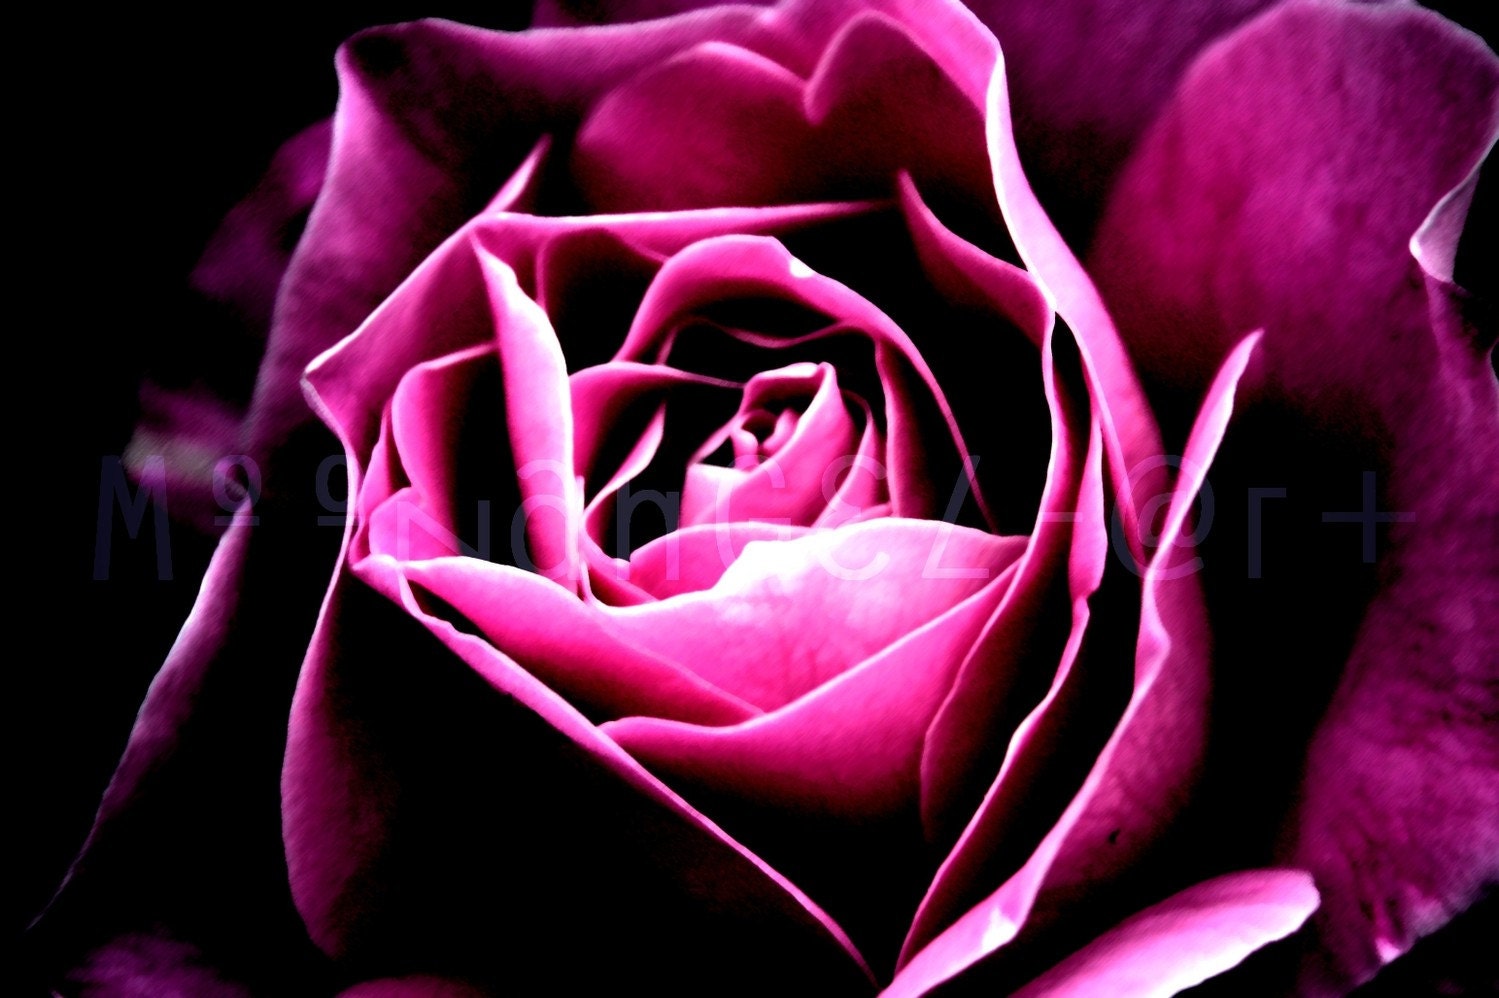 Twilight Rose 4x6 Inch Altered Fine Art Photo